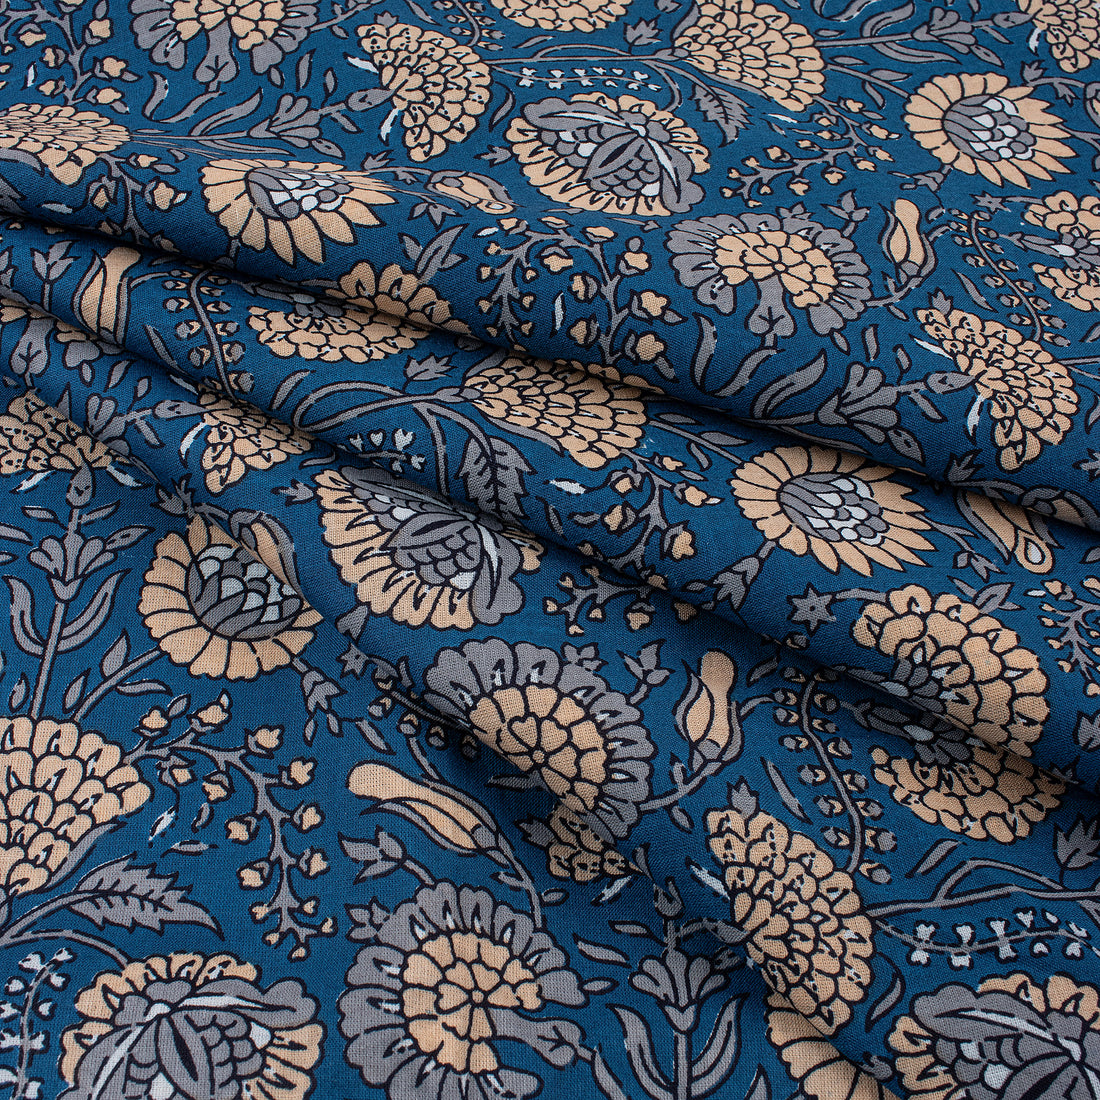 Handmade Printed Cotton Ethnic Fabric